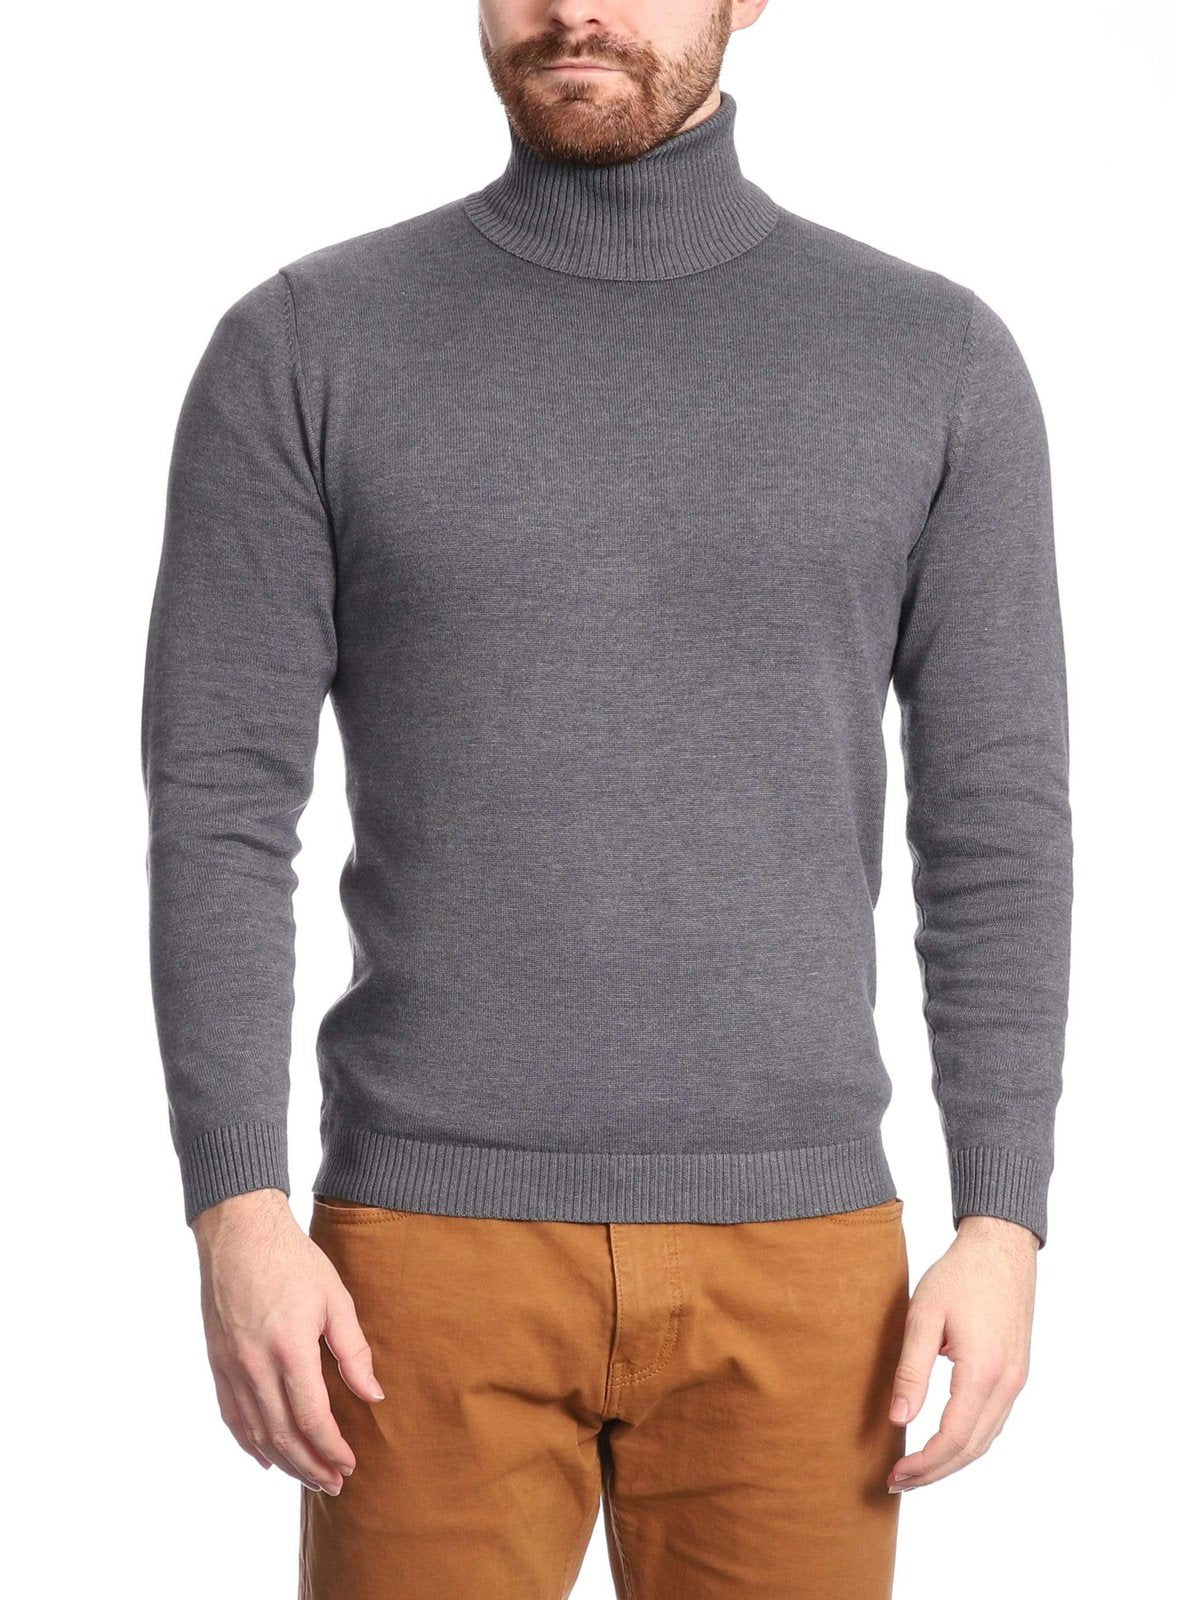 Arthur Black Default Category Migrated Gray / M Arthur Black Men&#39;s Solid Gray Pullover Cotton Blend Turtleneck Sweater Shirt